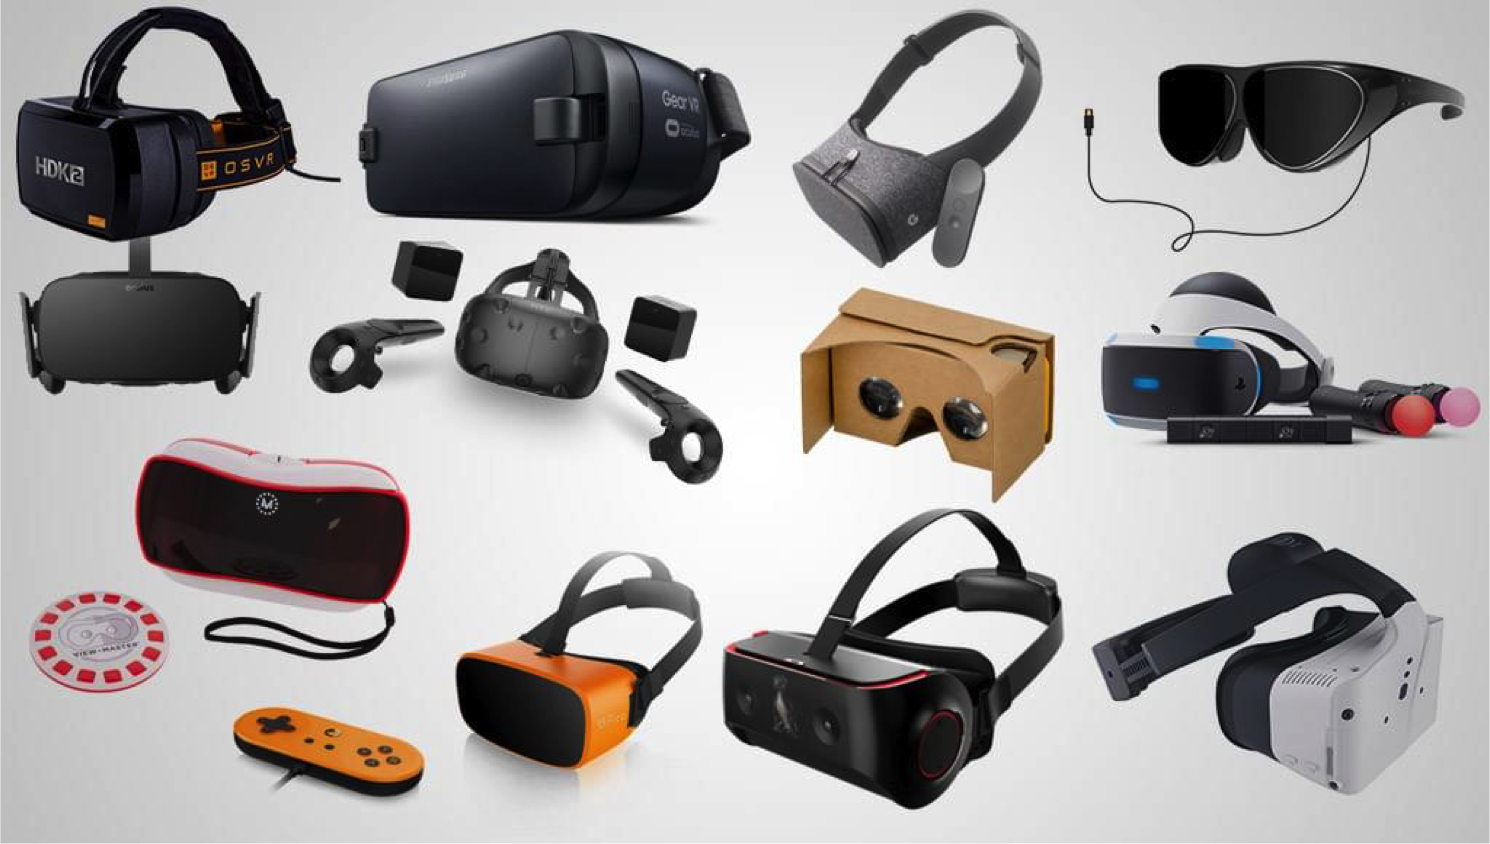 O vr. VR очки vr2. Шлем виртуальной реальности PLAYSTATION vr2. ВР очки Oculus go. Очки виртуальной реальности Pico Neo 3.